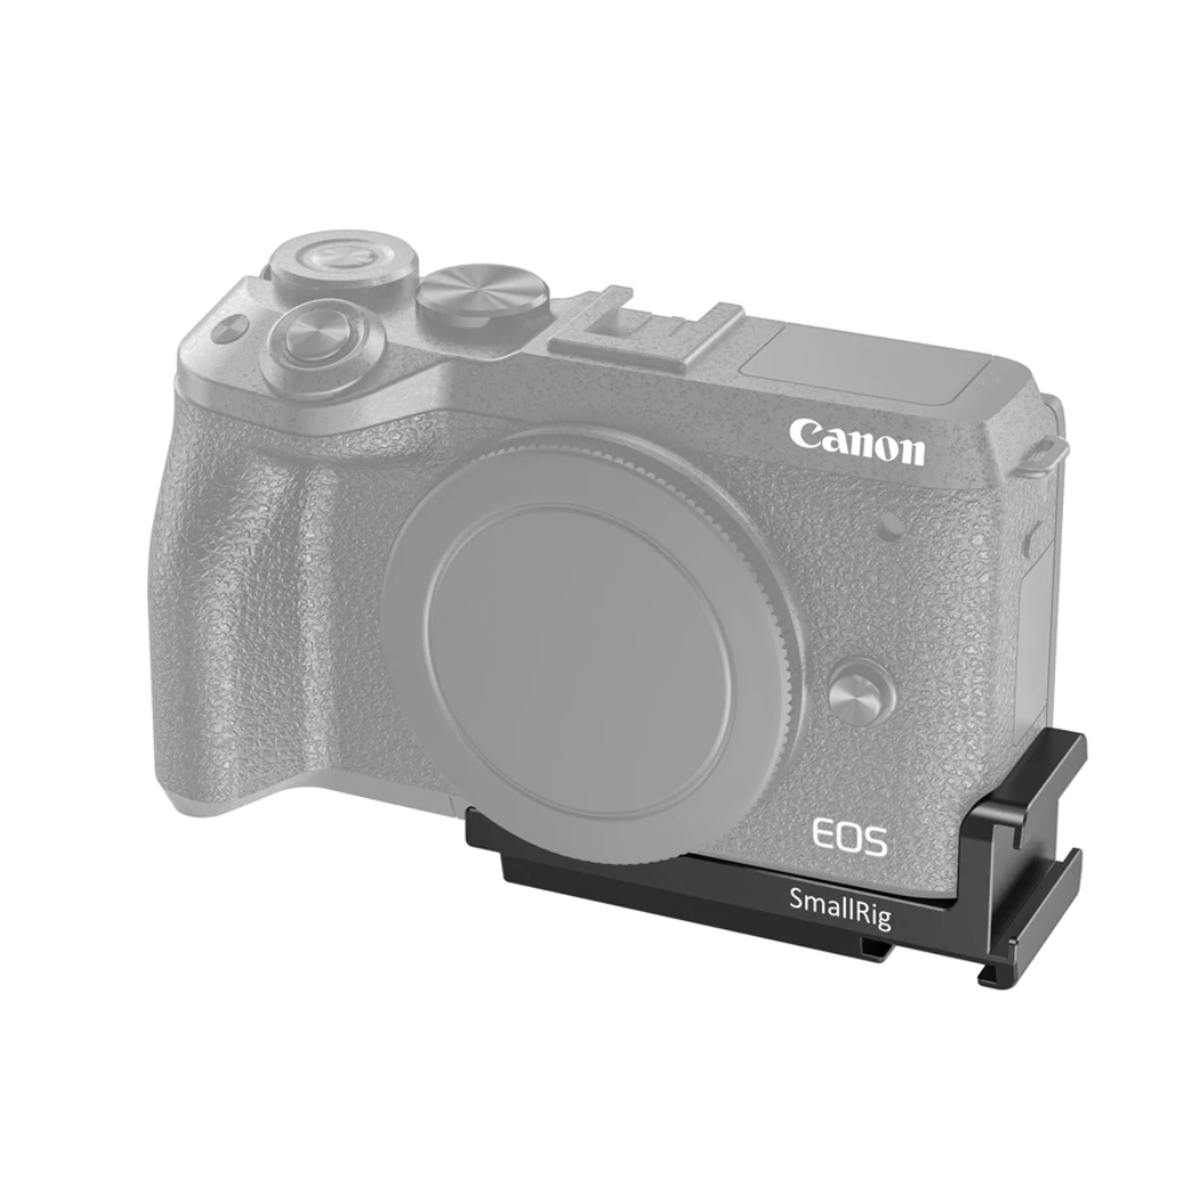 Smallrig 2517 ColdShoe Platte für Canon EOS M6 Mark II